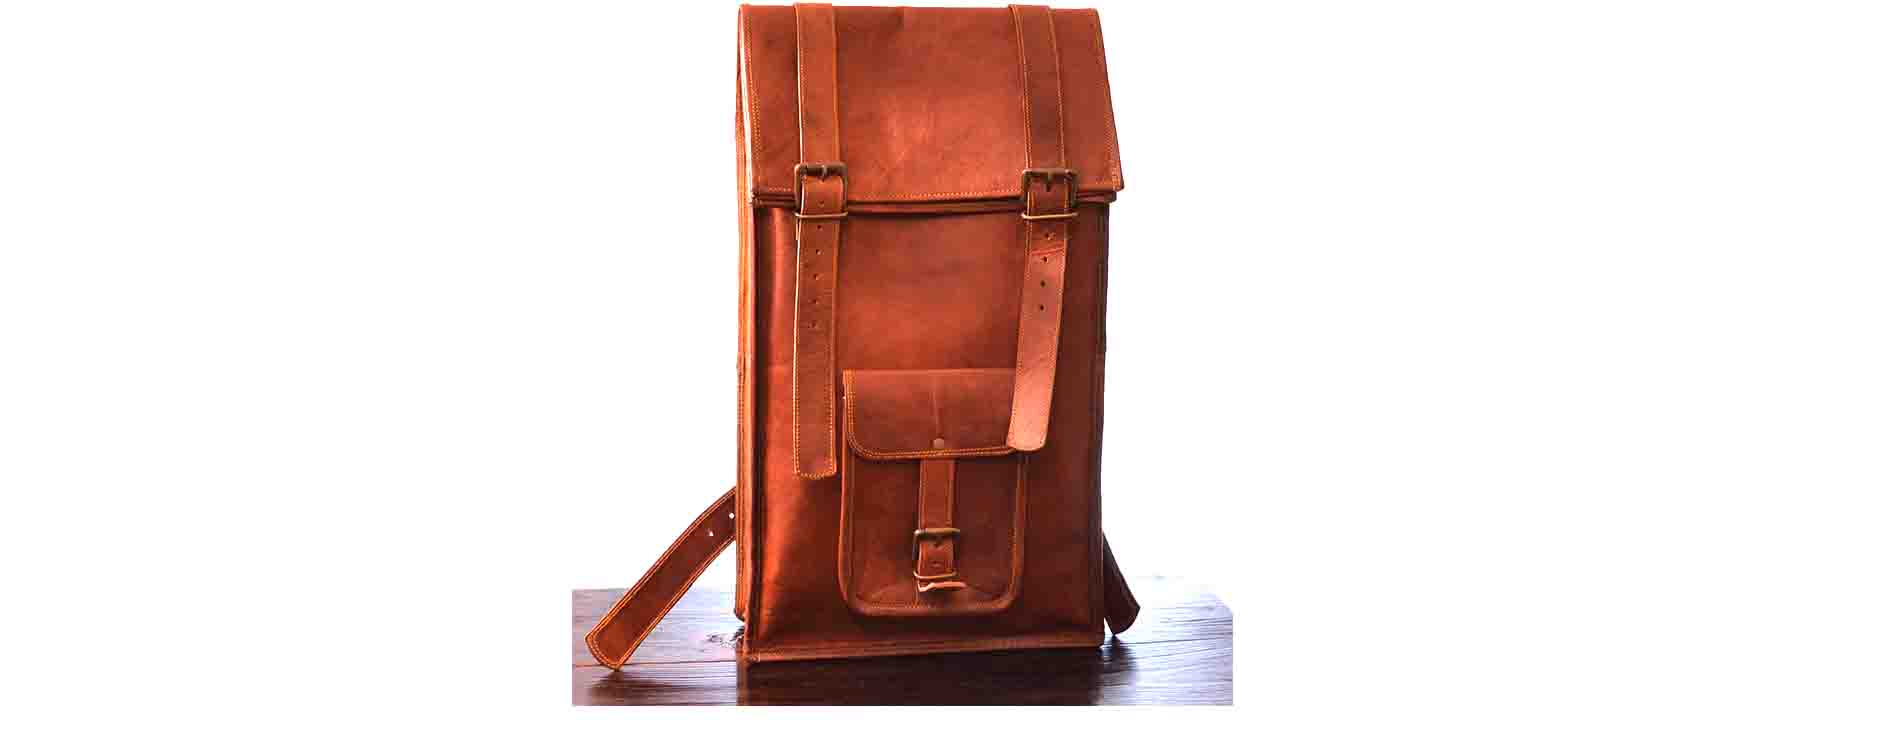 Rhinoland Unisex Leather Laptop Bag Trekking Bag Hiking Backpack College School Office Biker Bag Third Type